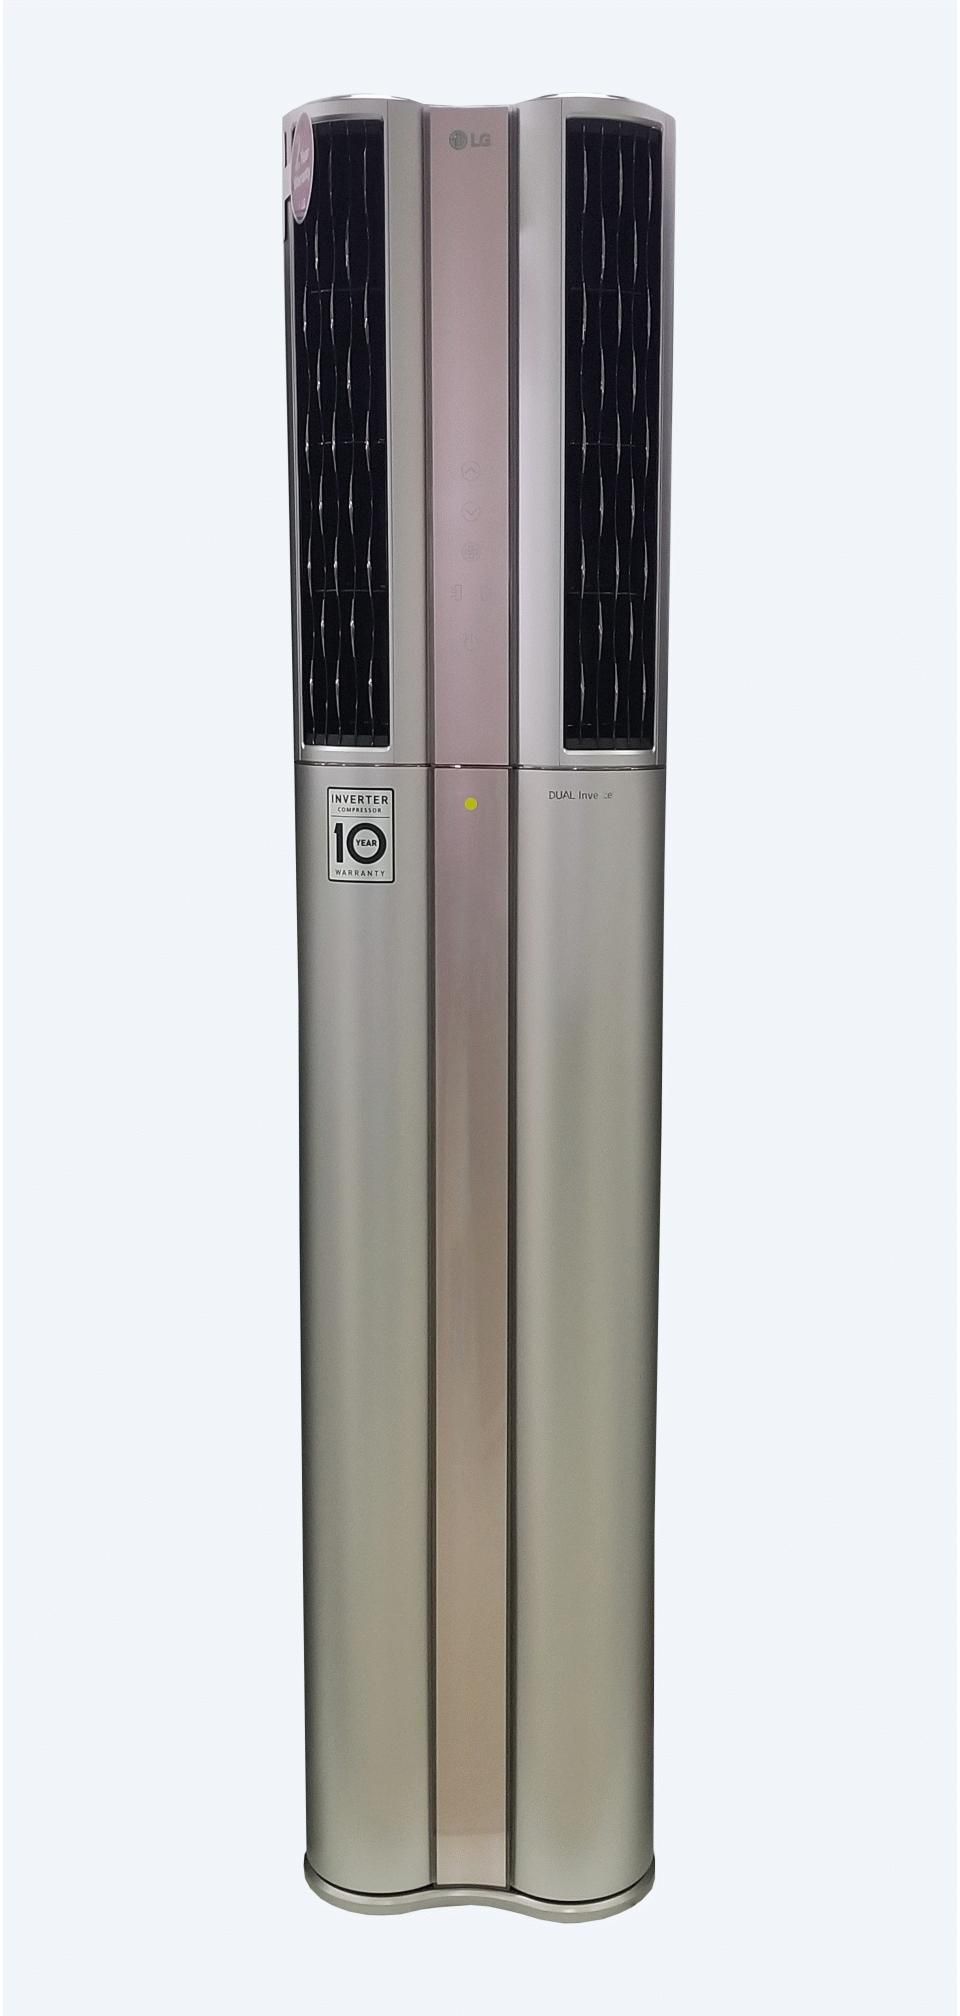 LG DUALCOOL Premium Gold Air Conditioner F4-W24MPRYO 2.5HP